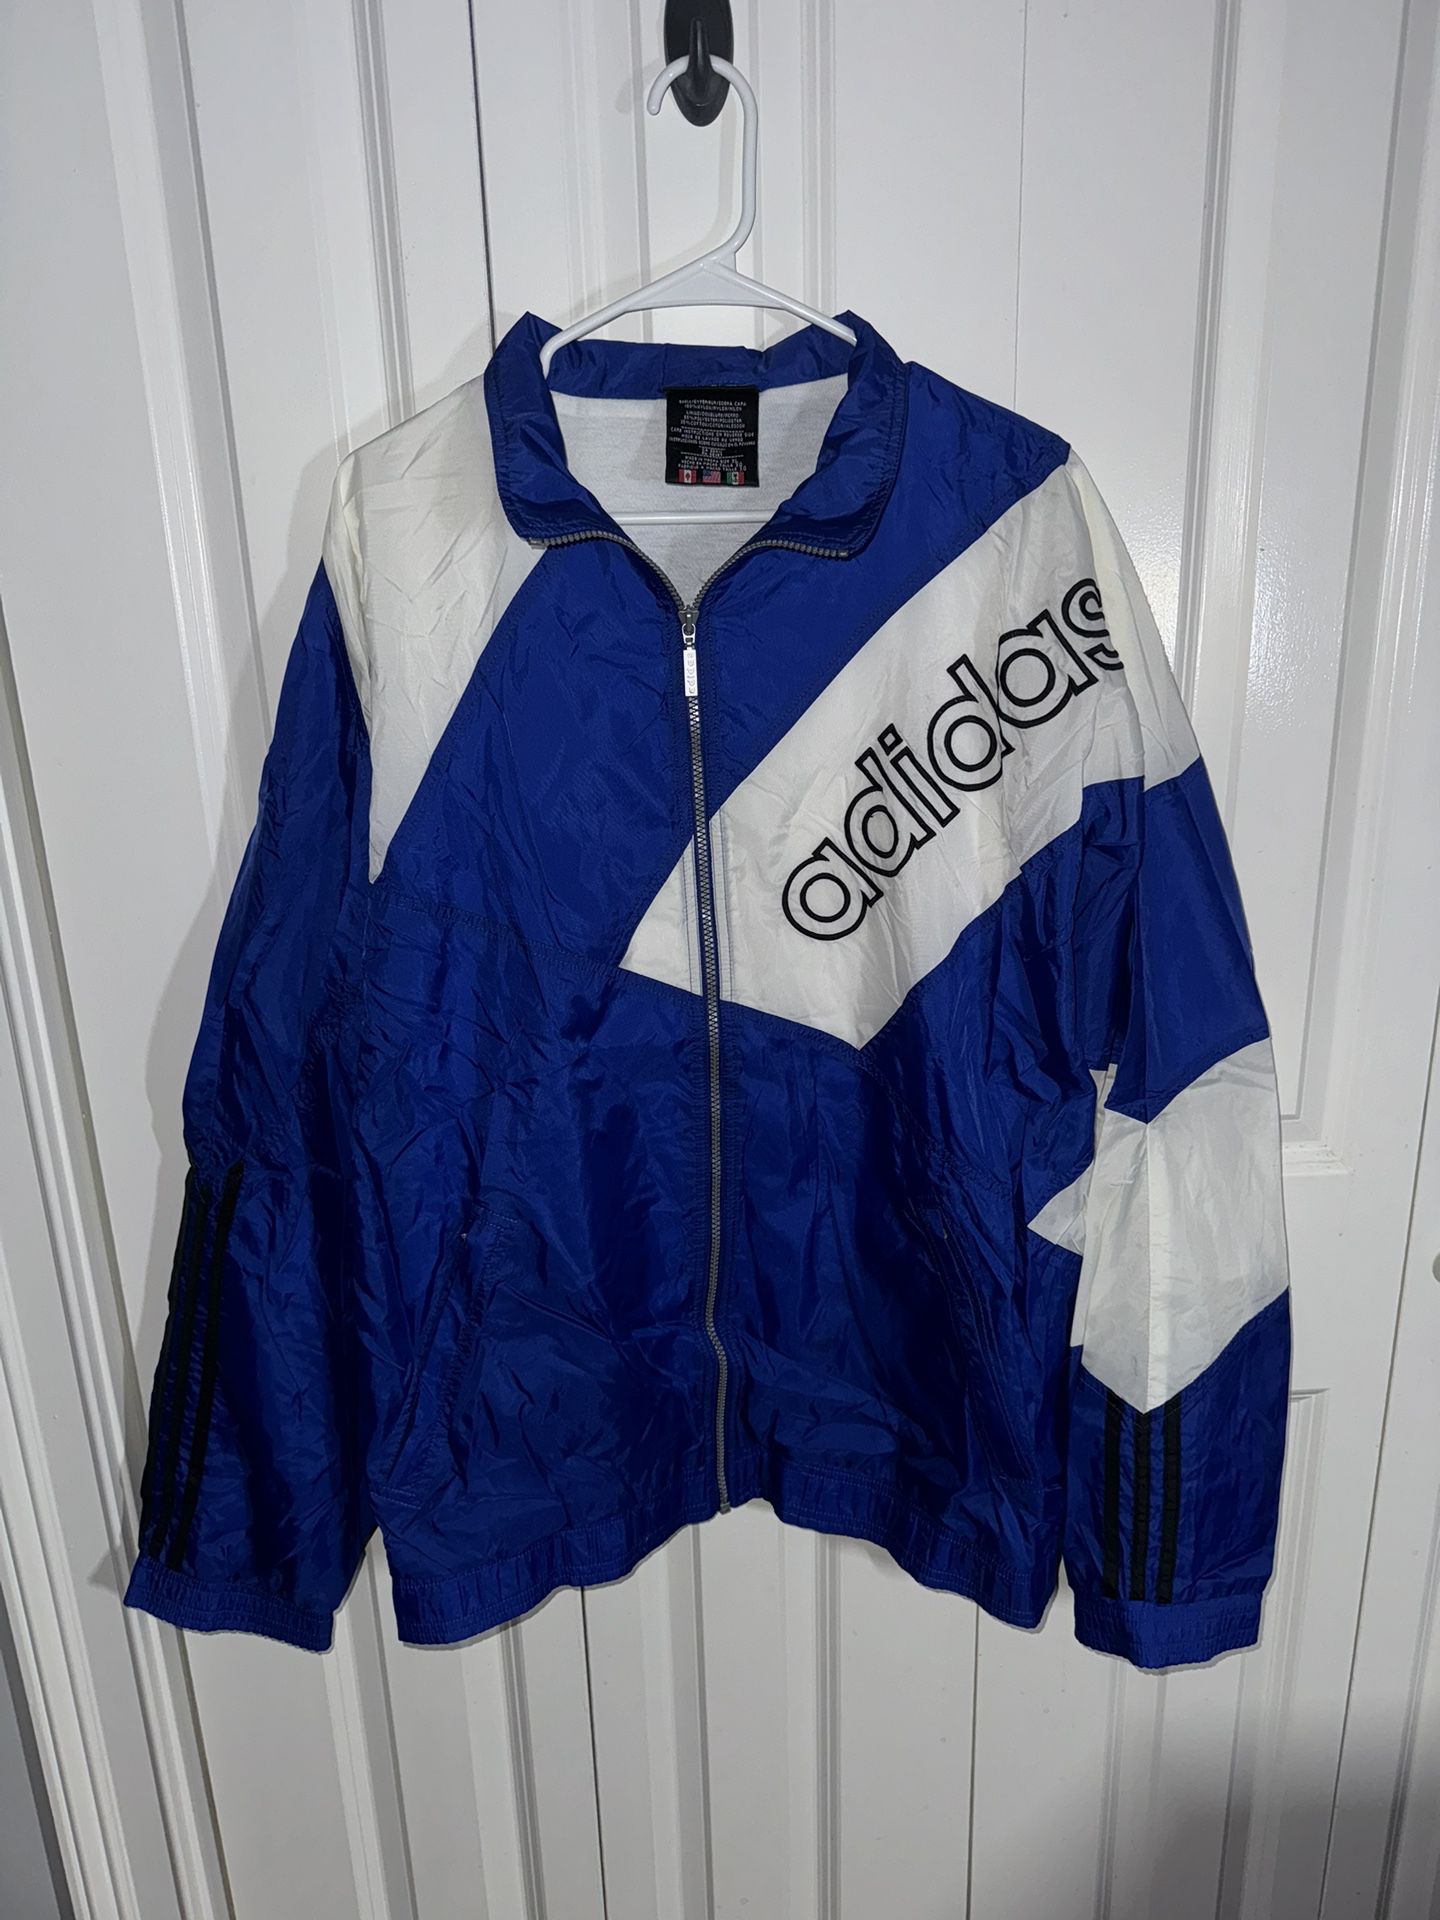 Vintage 90s Adidas Full Zip Windbreaker Jacket Colorblock Blue White Size XL Y2K